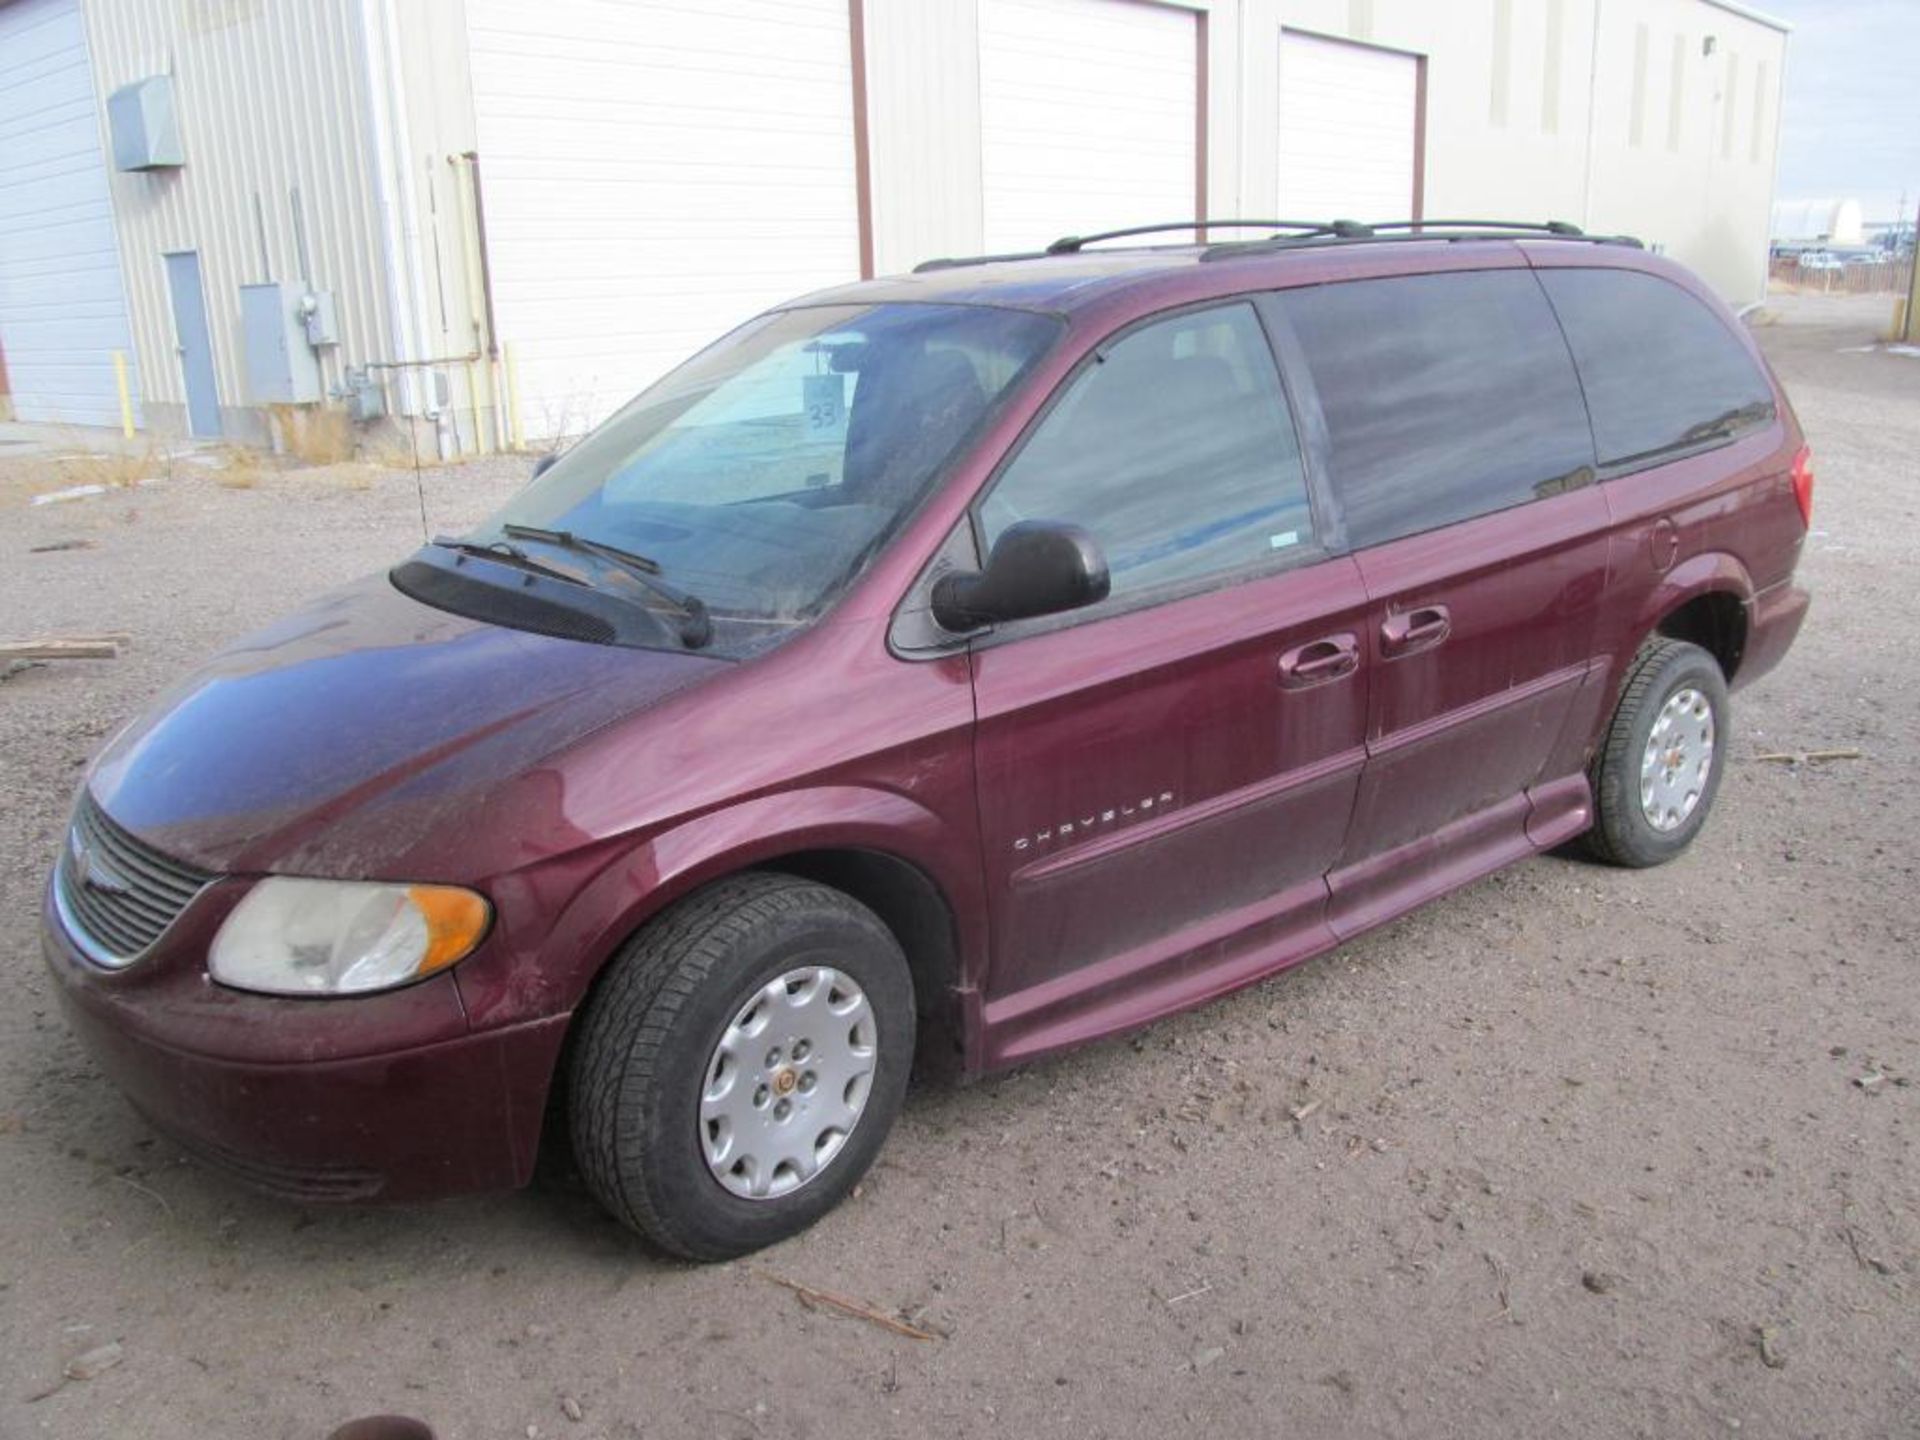 Chrysler Town & Country LX Full Mobility Kneeling Mini Van, VIN: 2C4GD44311R390145 (New 2001), with